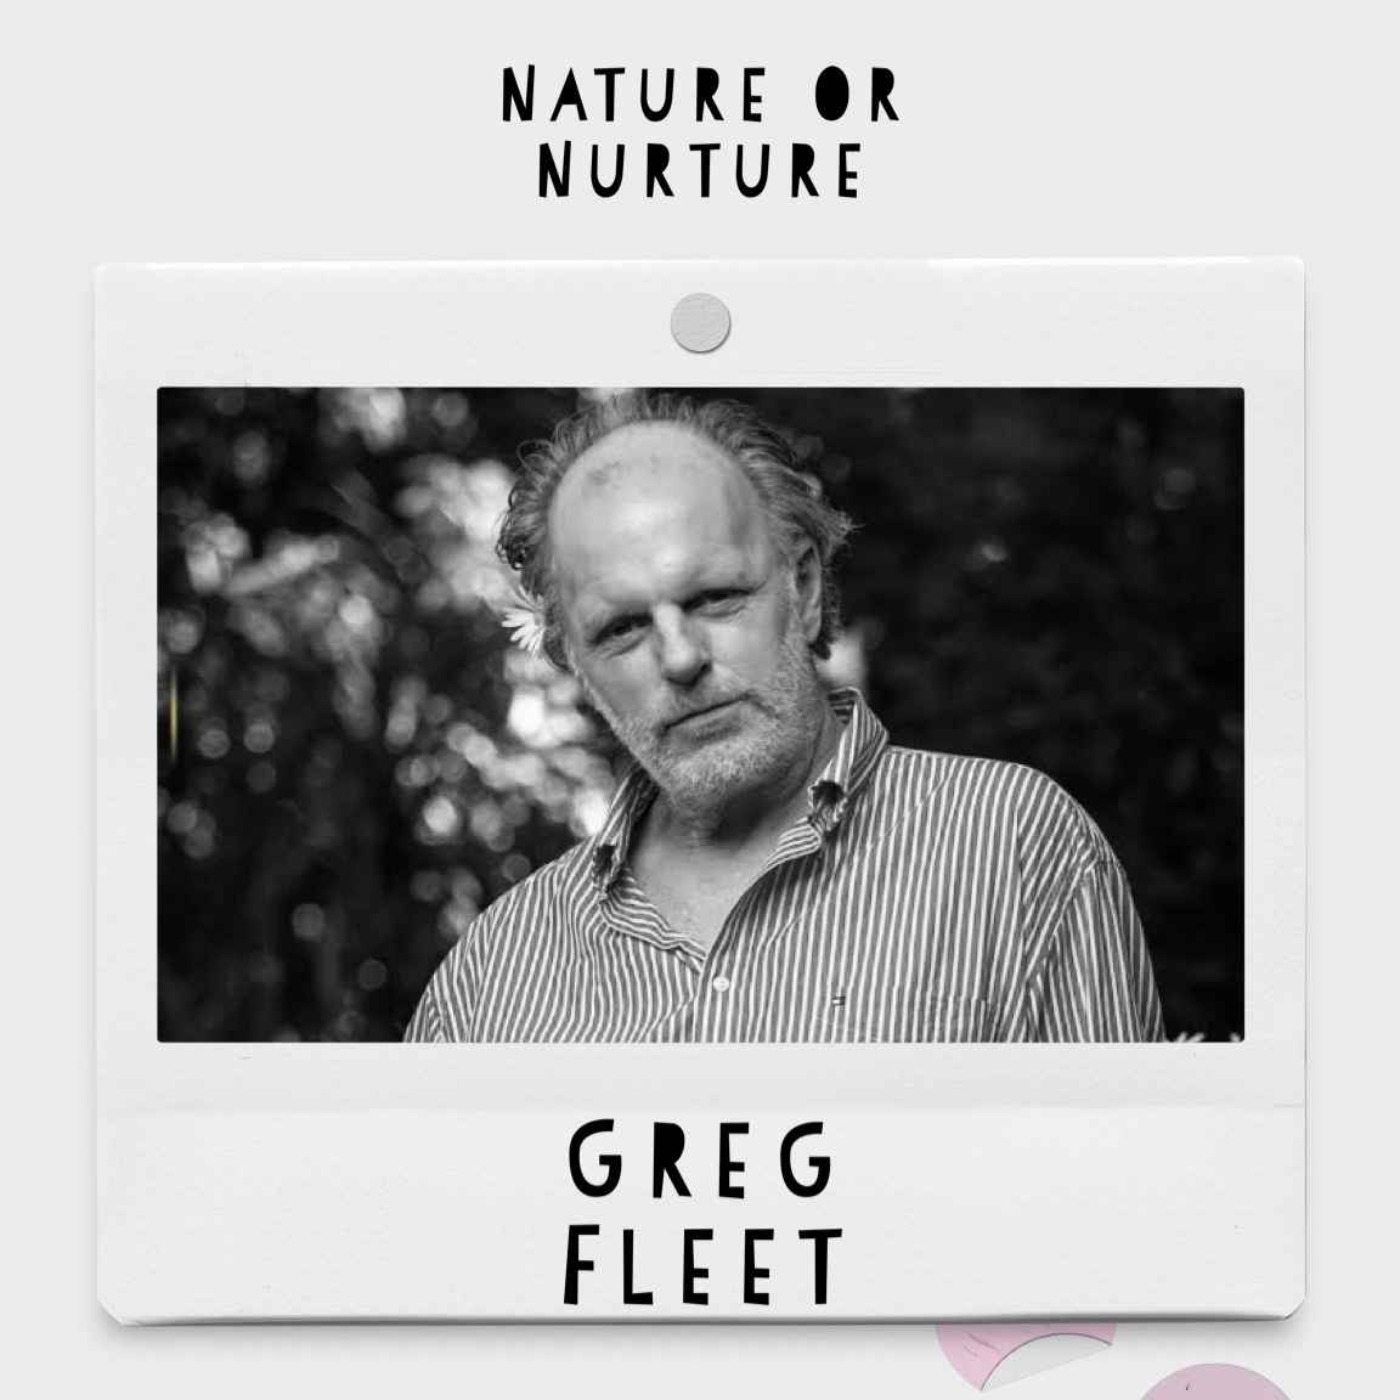 Greg Fleet